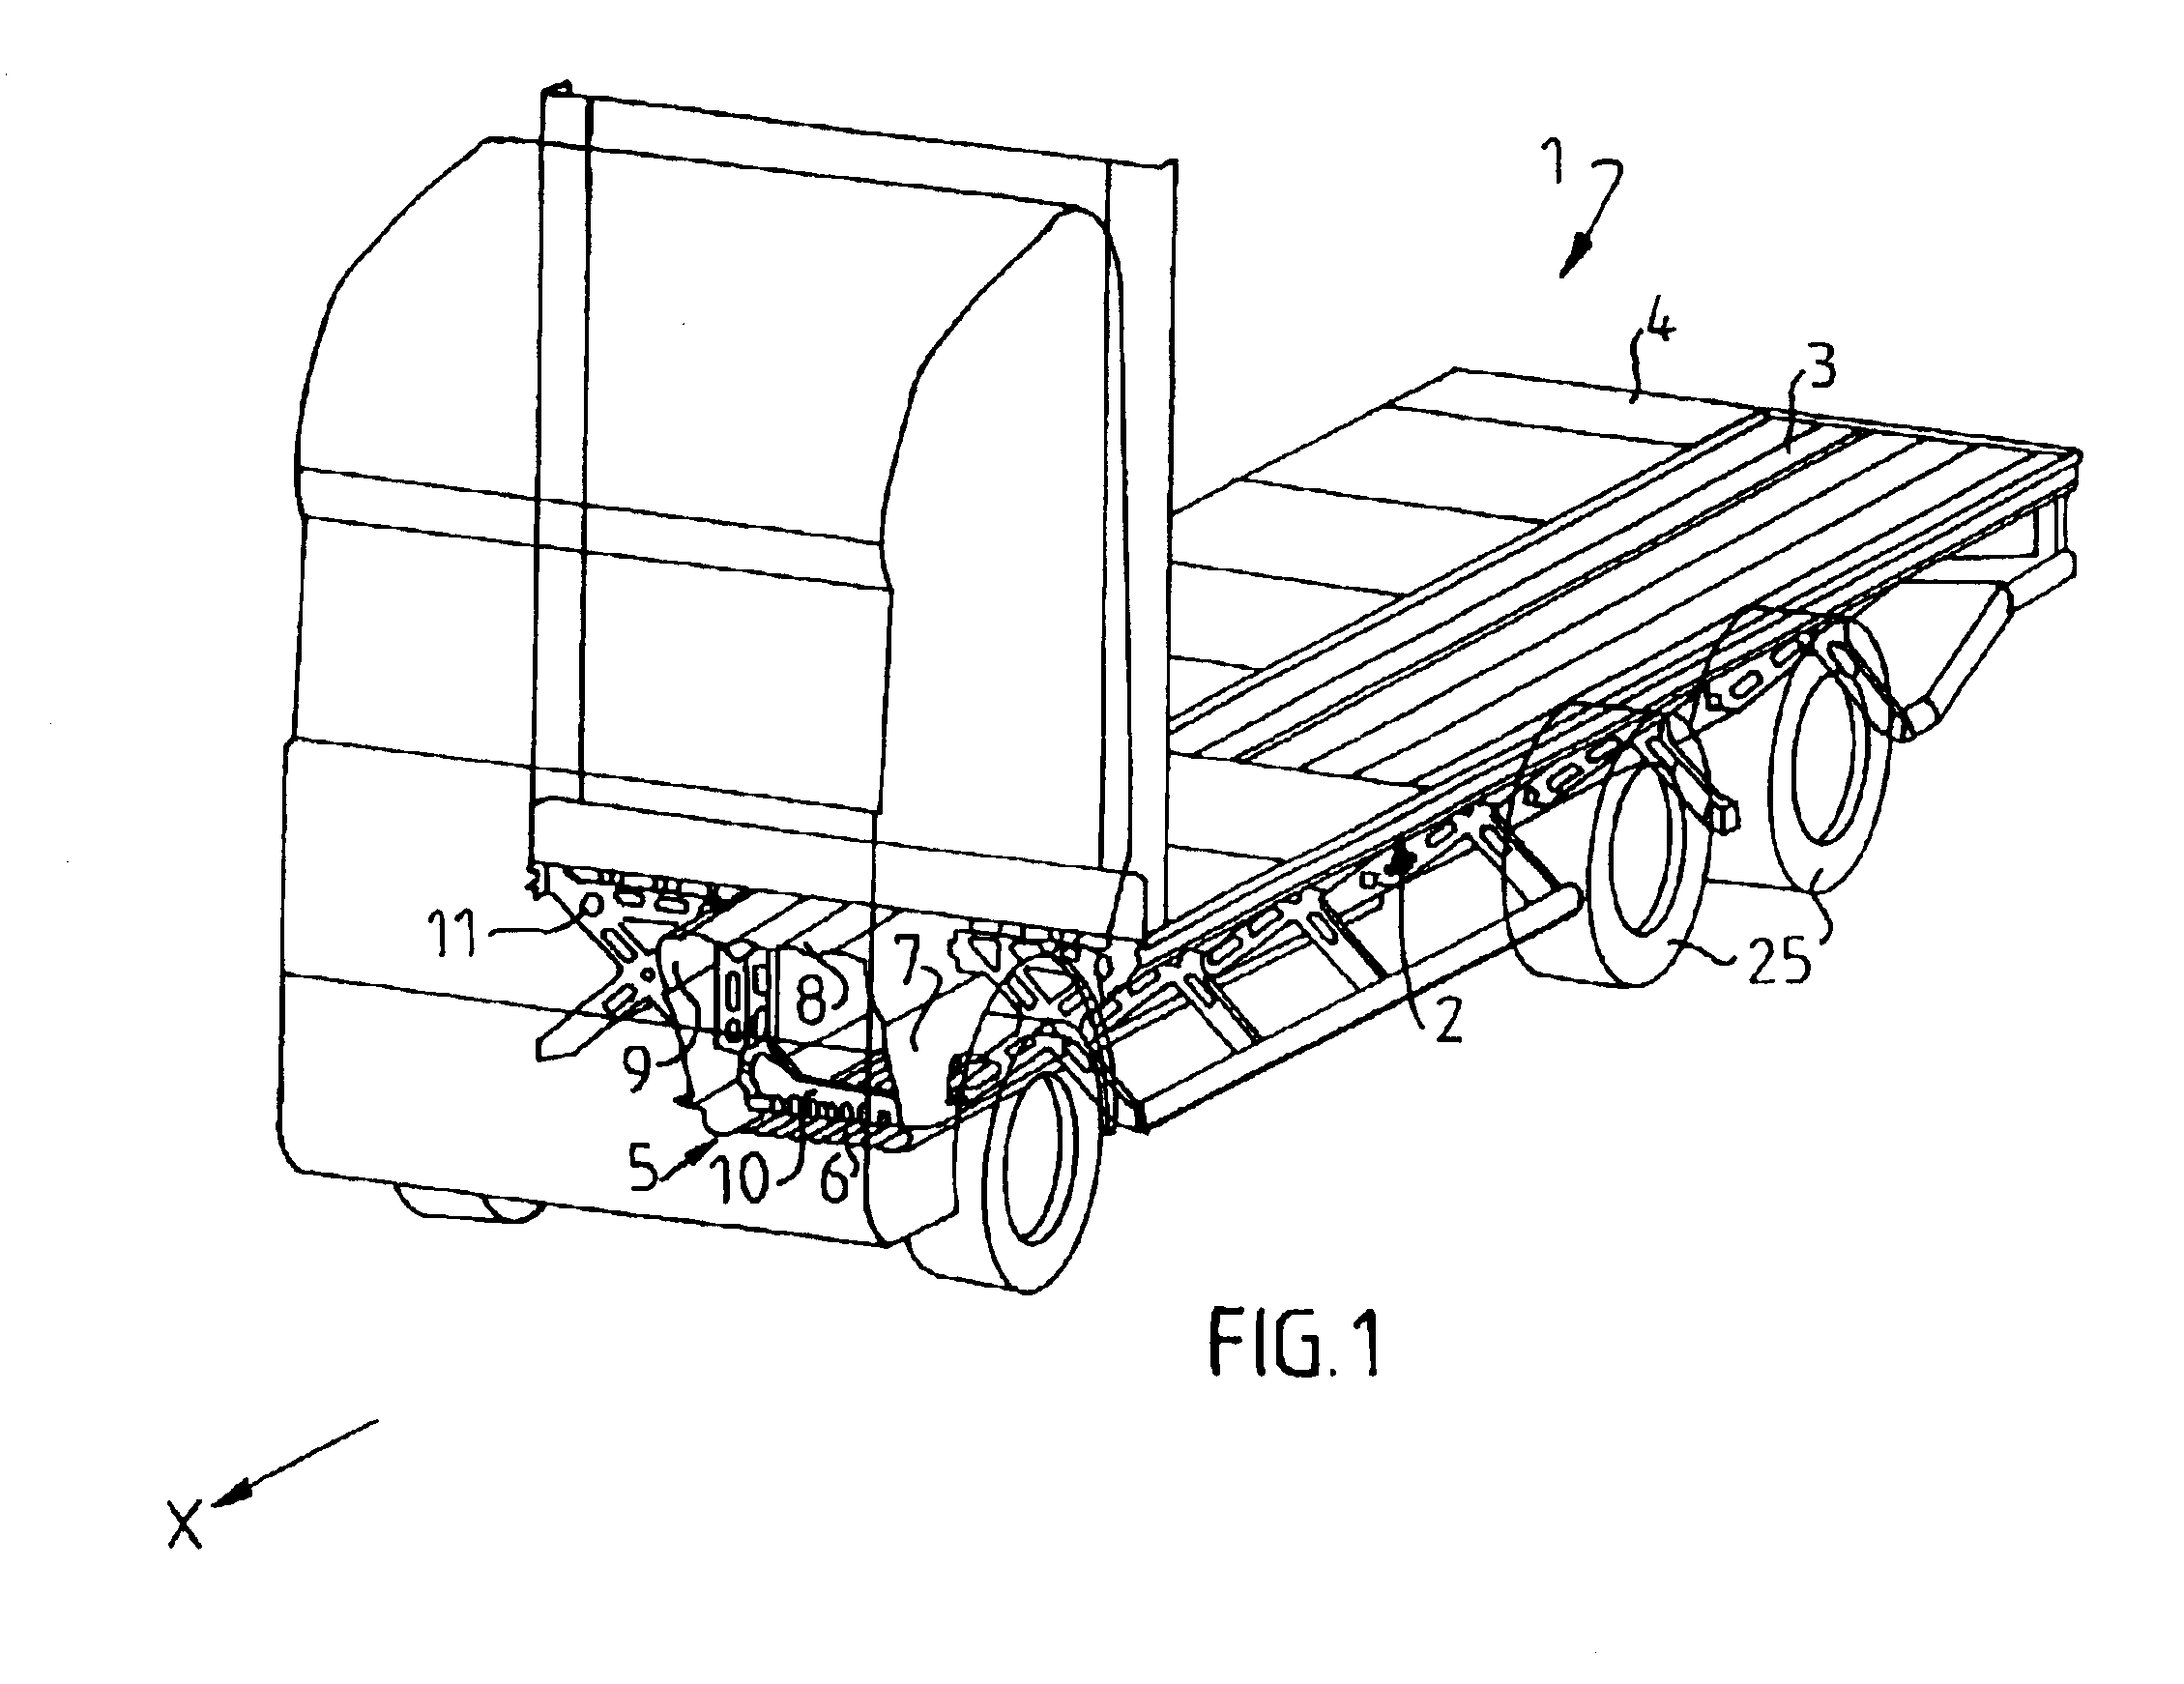 Rear axle arrangement for a heavy vehicle